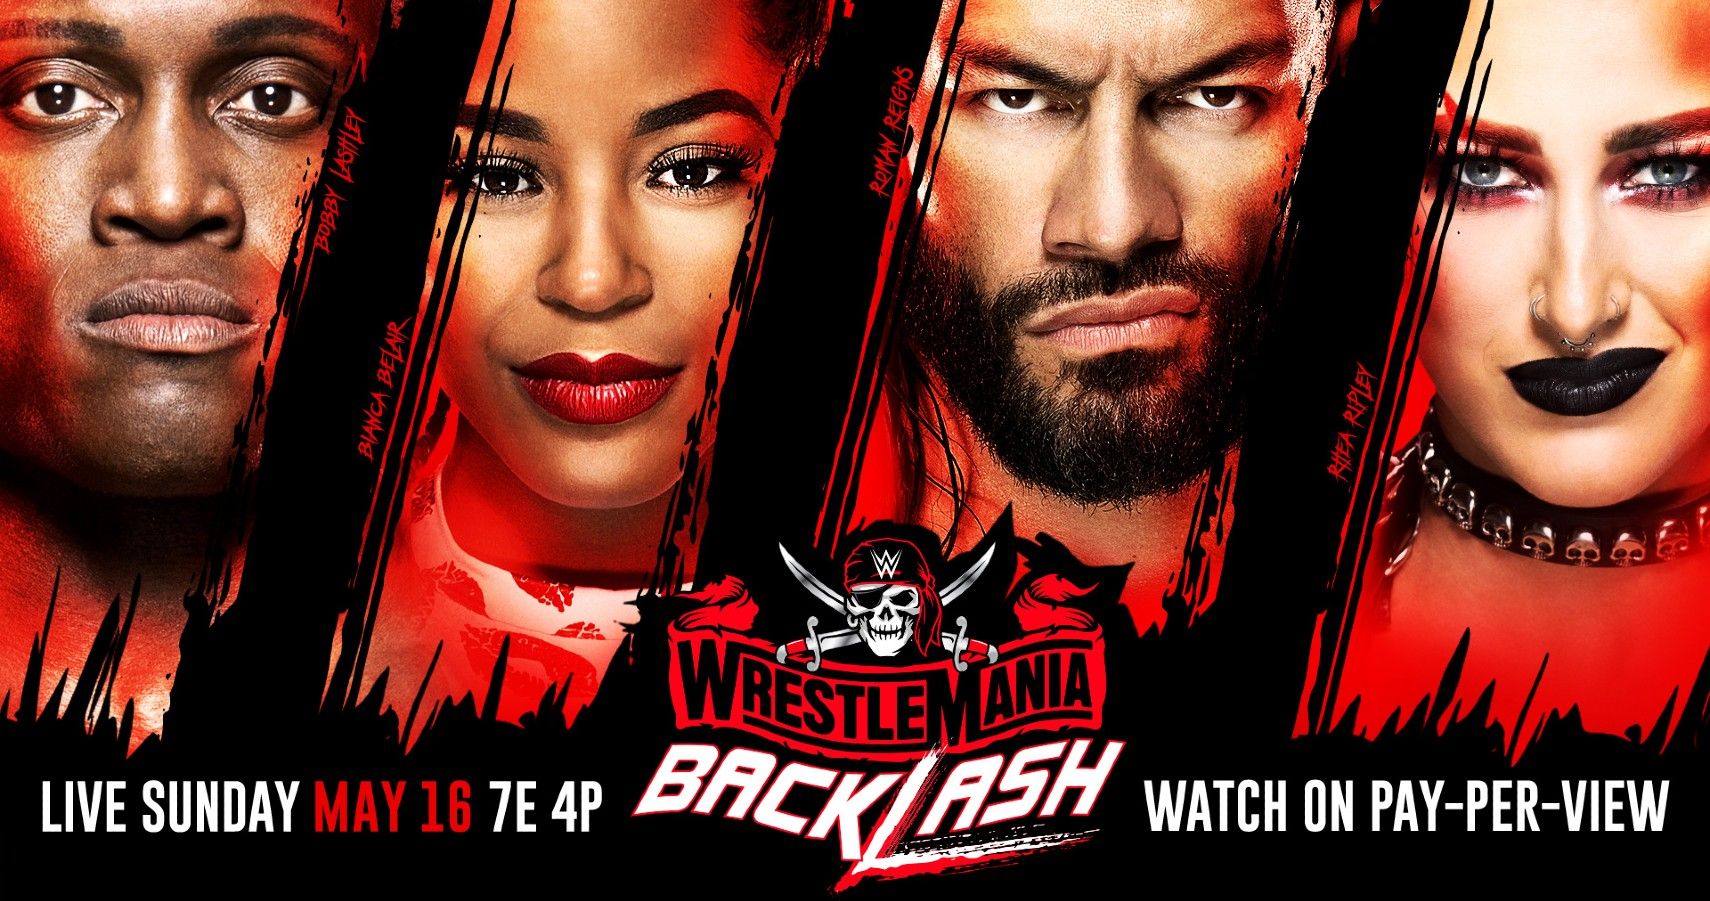 WWE WrestleMania Backlash 2021 Match Card And Predictions